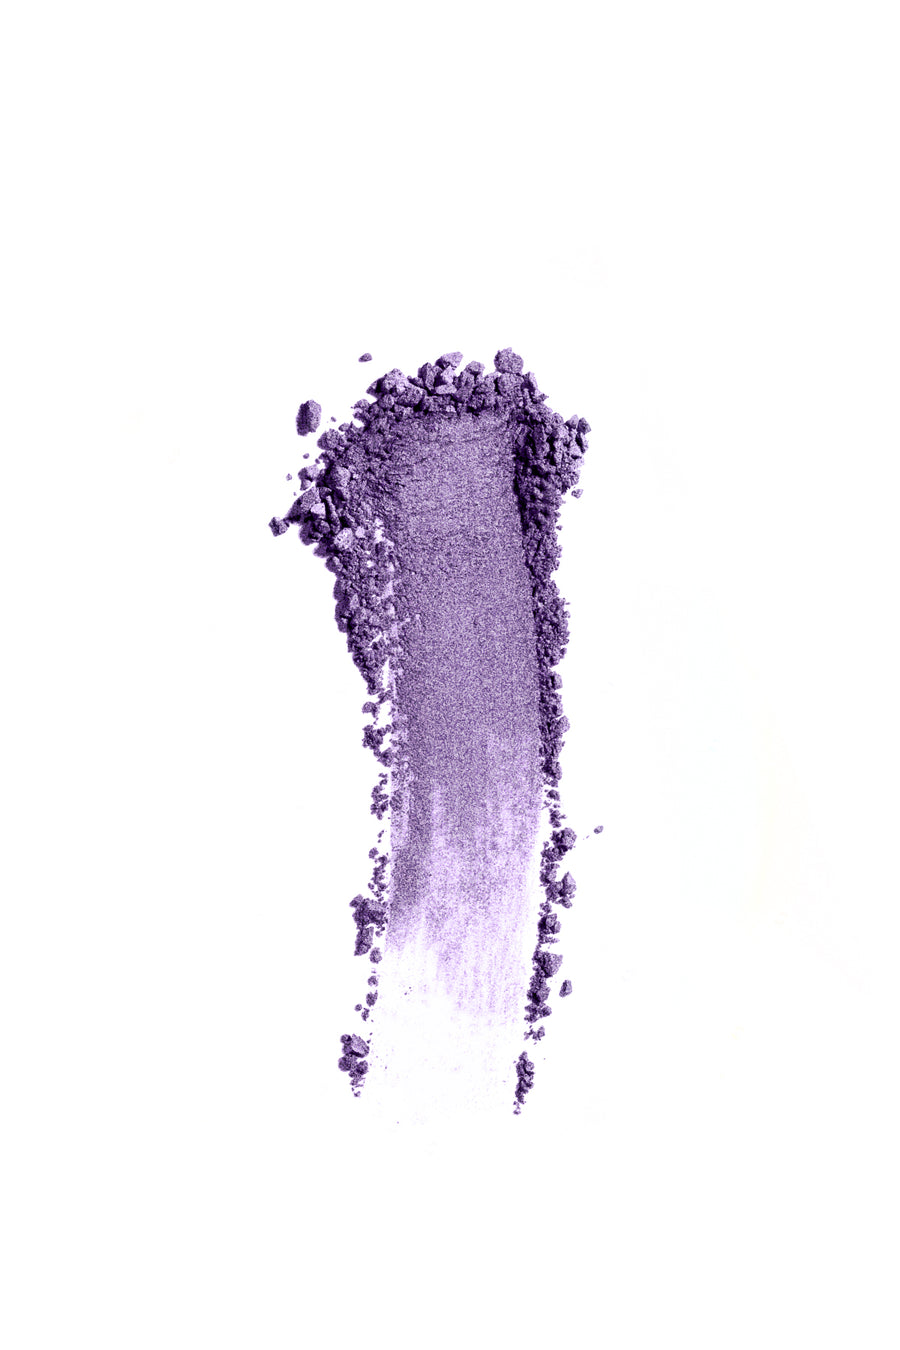 Shimmer Eyeshadow #22 - Heather Purple - Blend Mineral Cosmetics